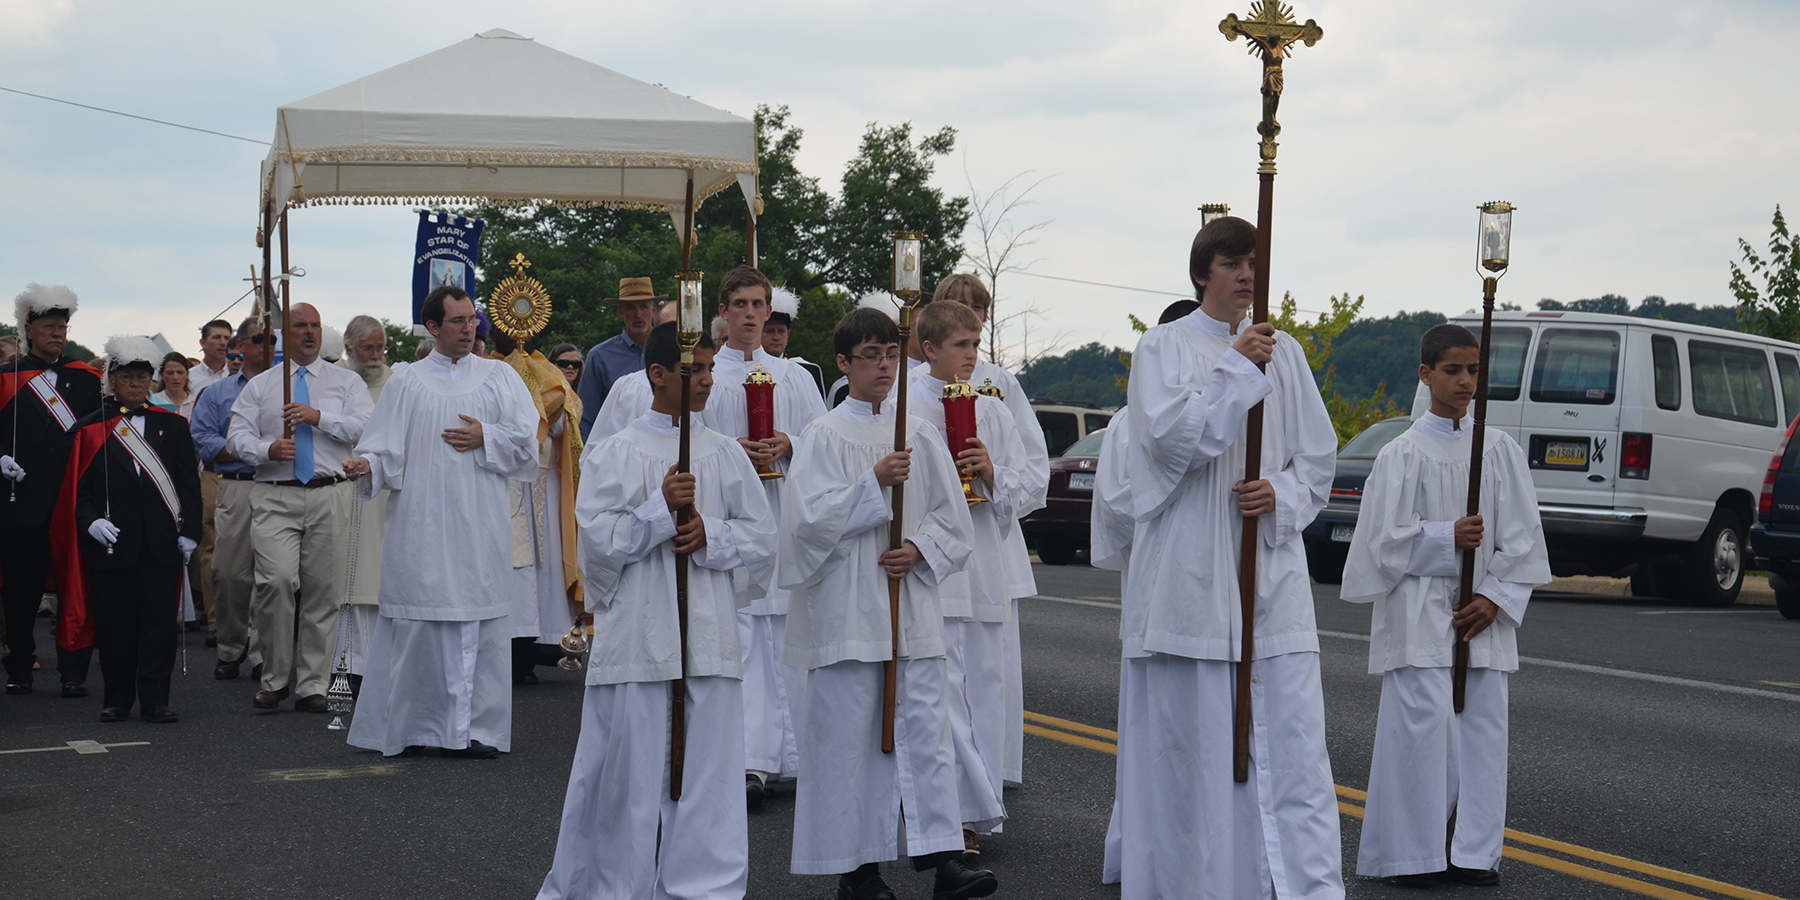 The Corpus Christi procession